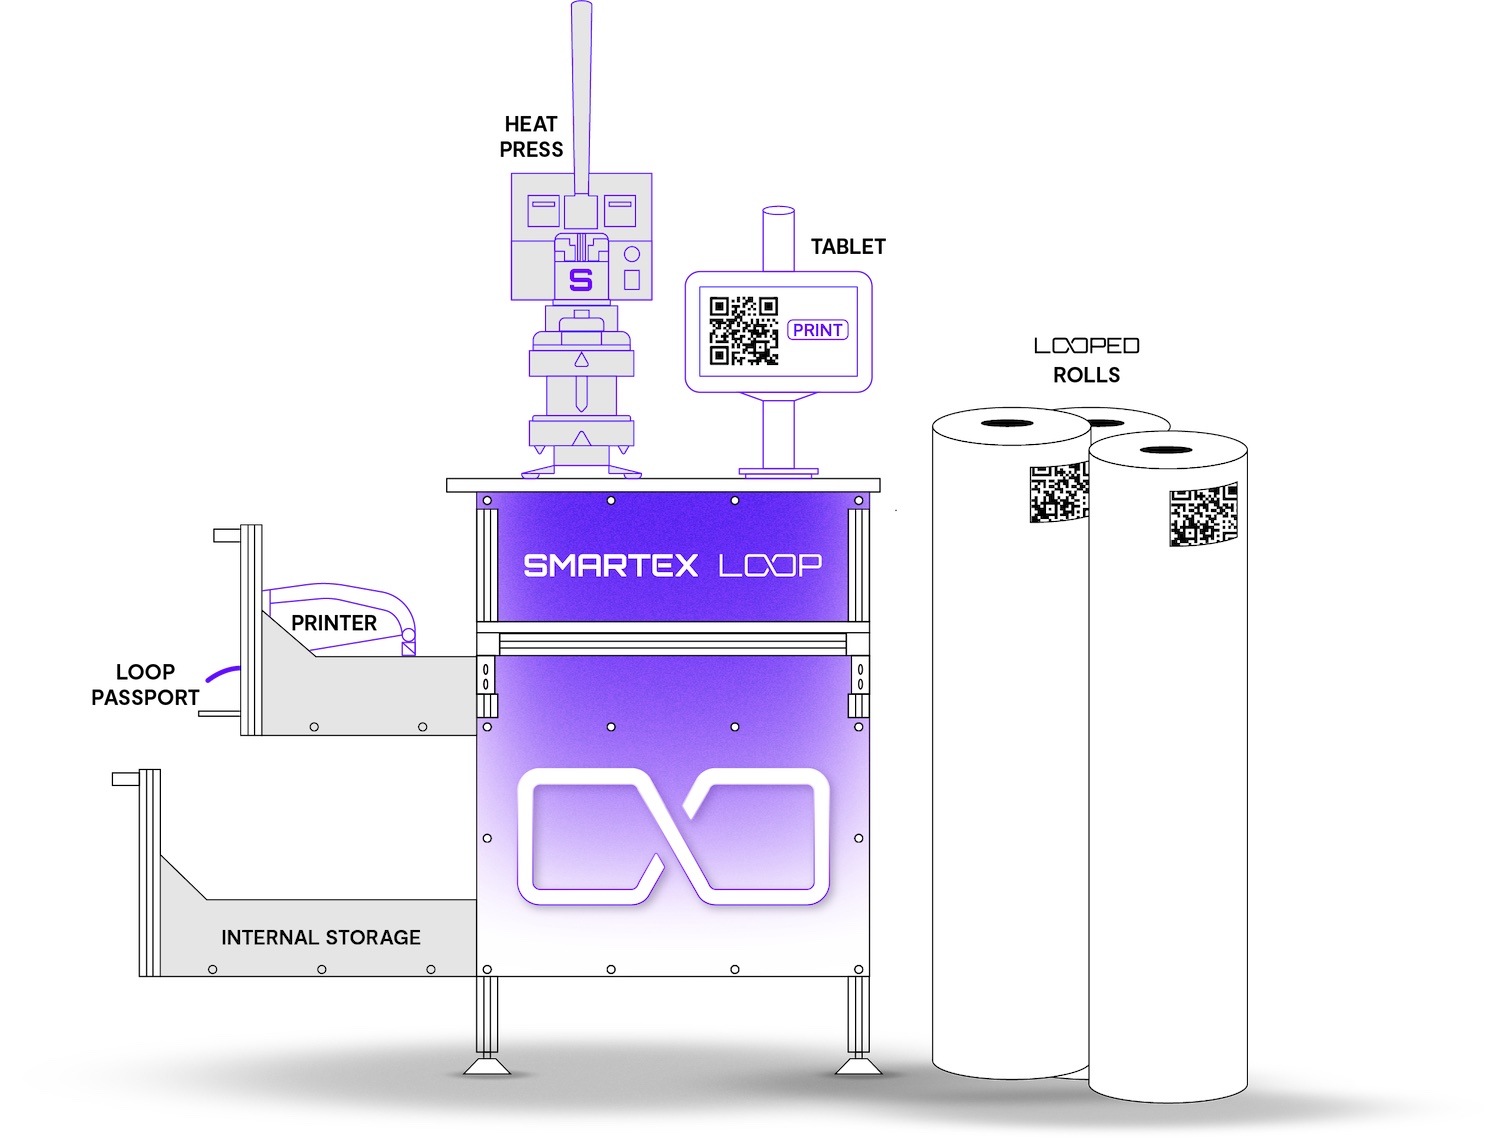 Smartex Loop station hardware. © Smartex